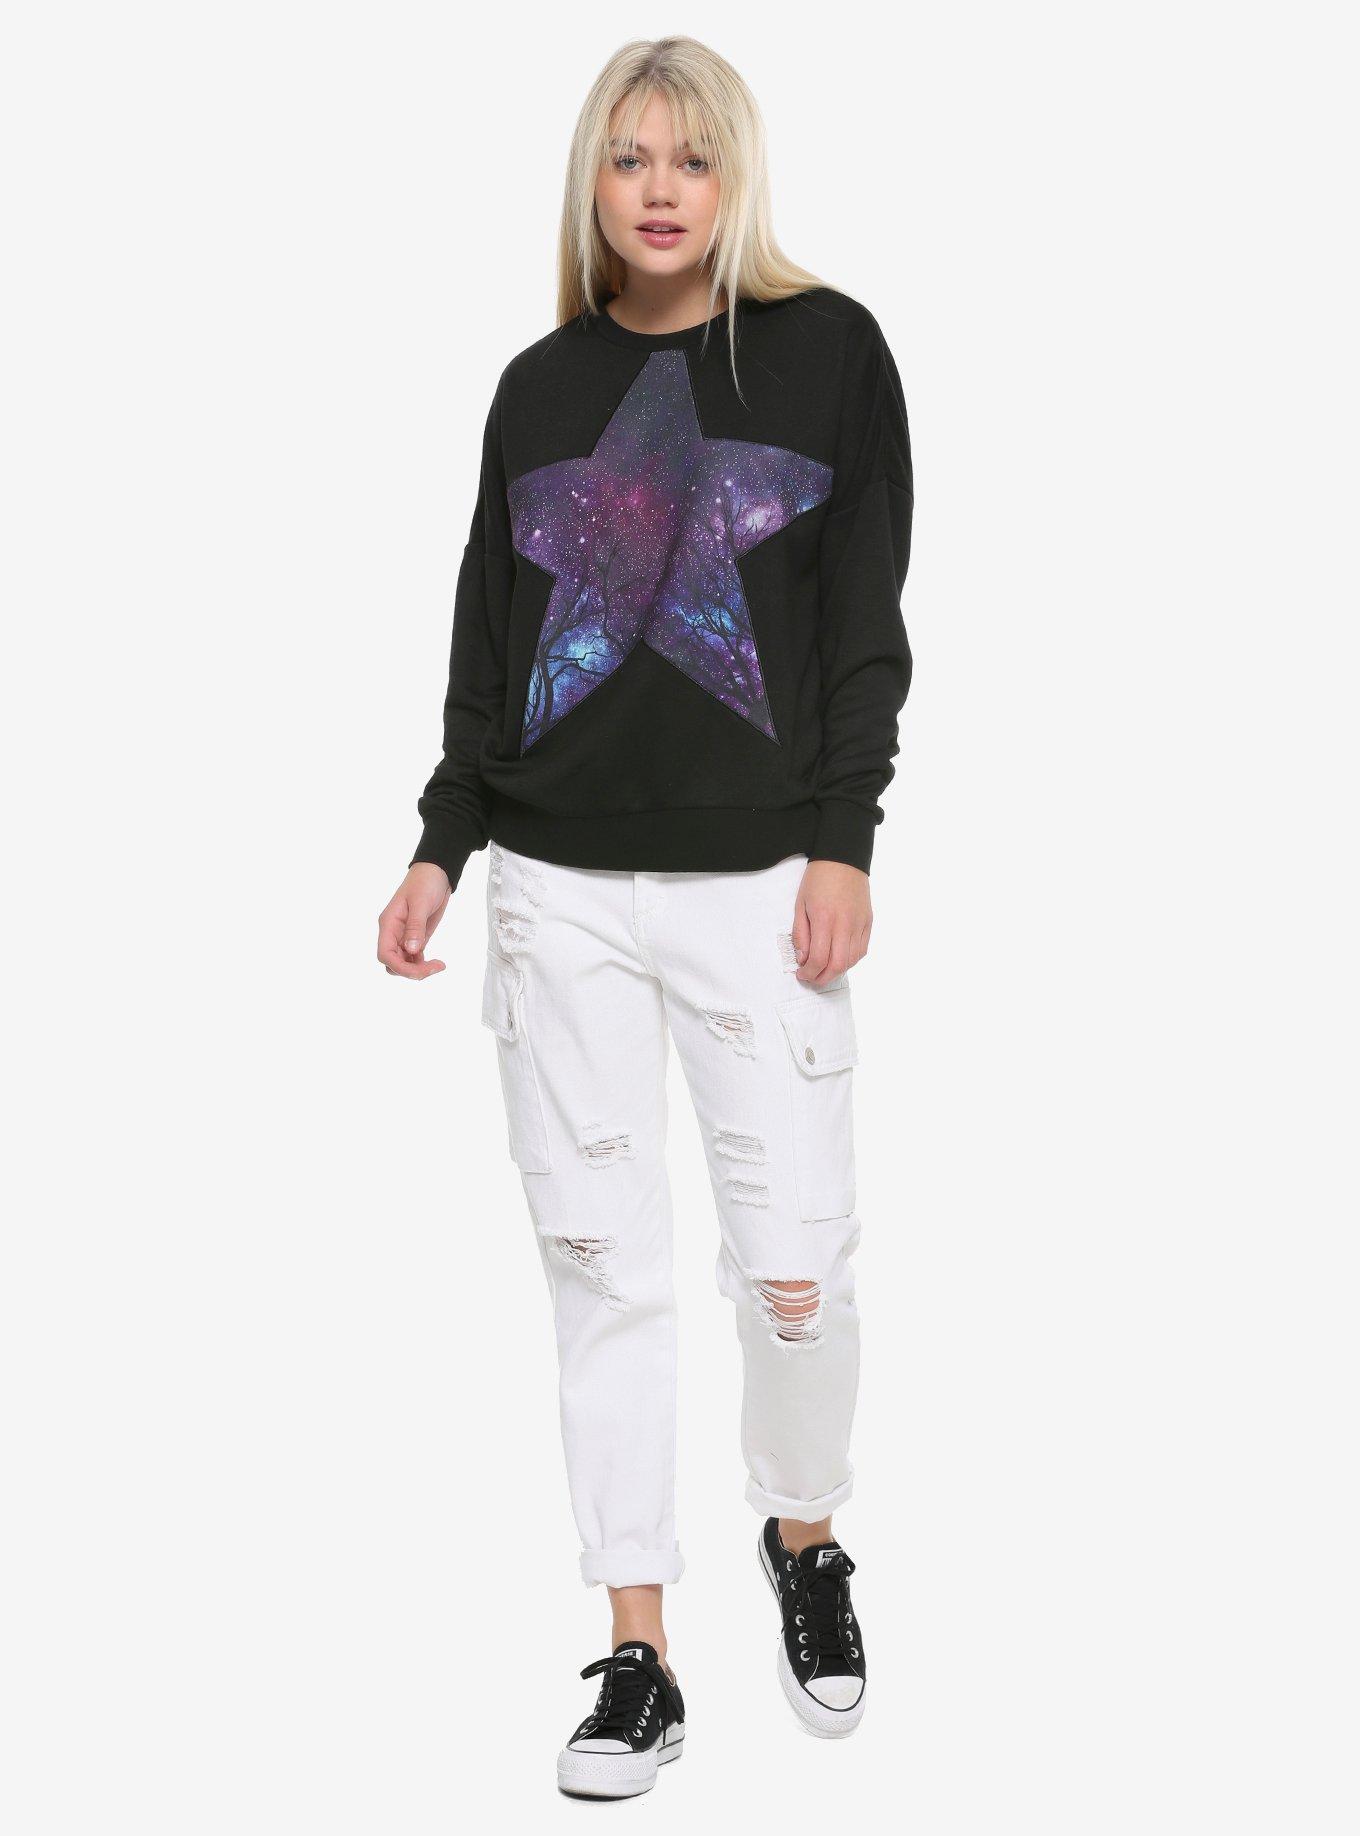 Starry Night Applique Girls Sweatshirt, MULTI, alternate